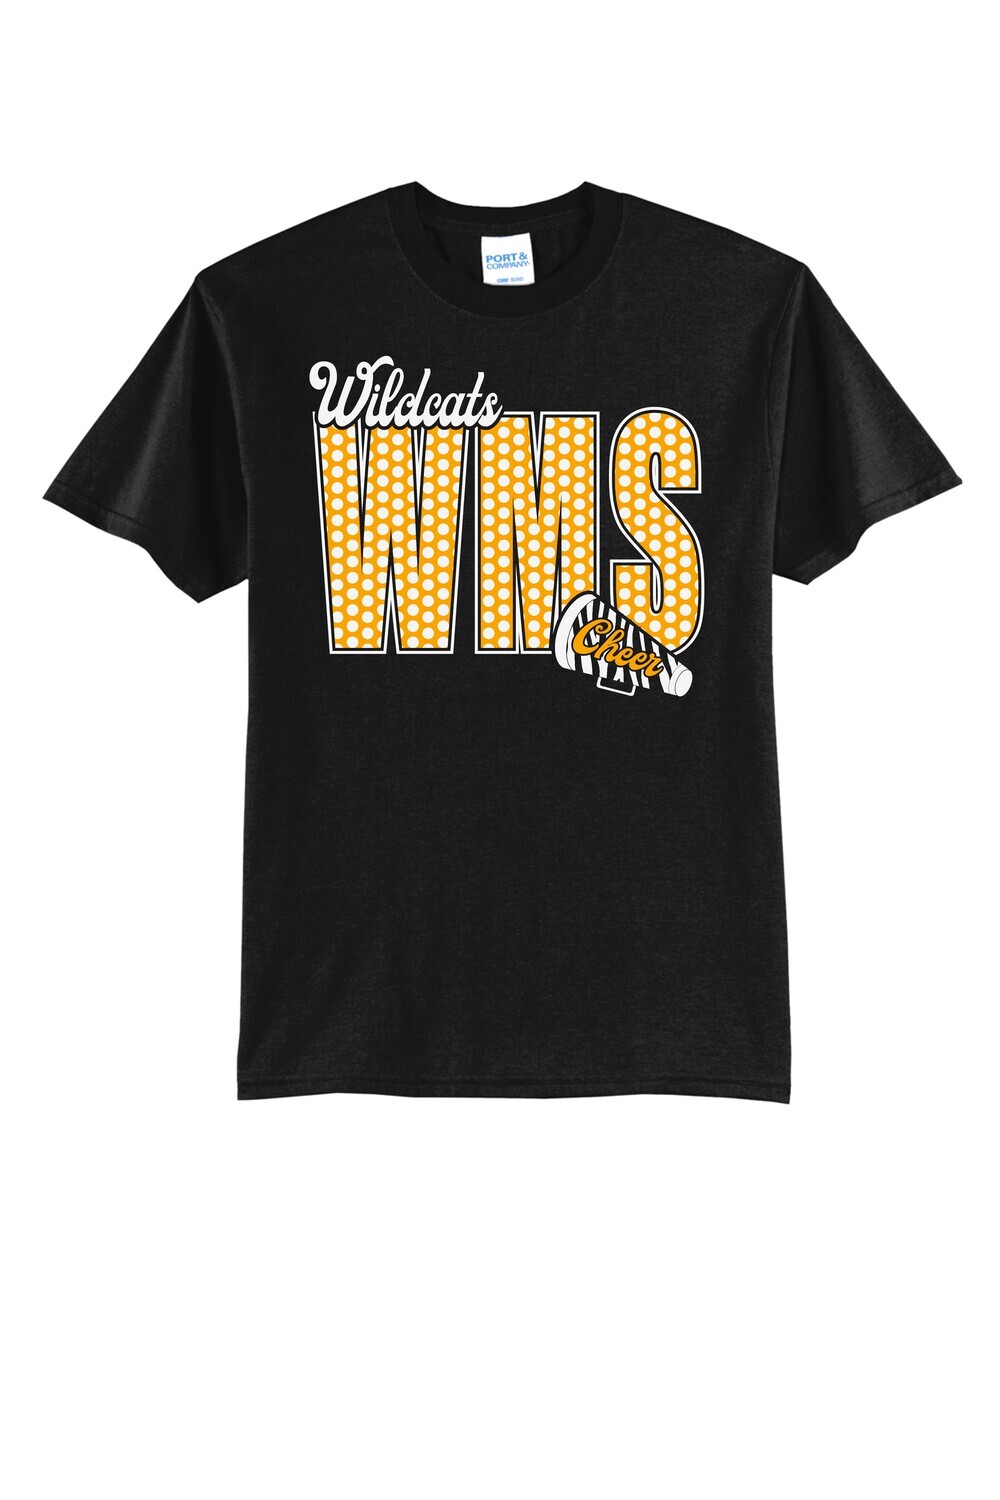 WMS Cheer Design - T-shirt, Long Sleeve, or Hoodie